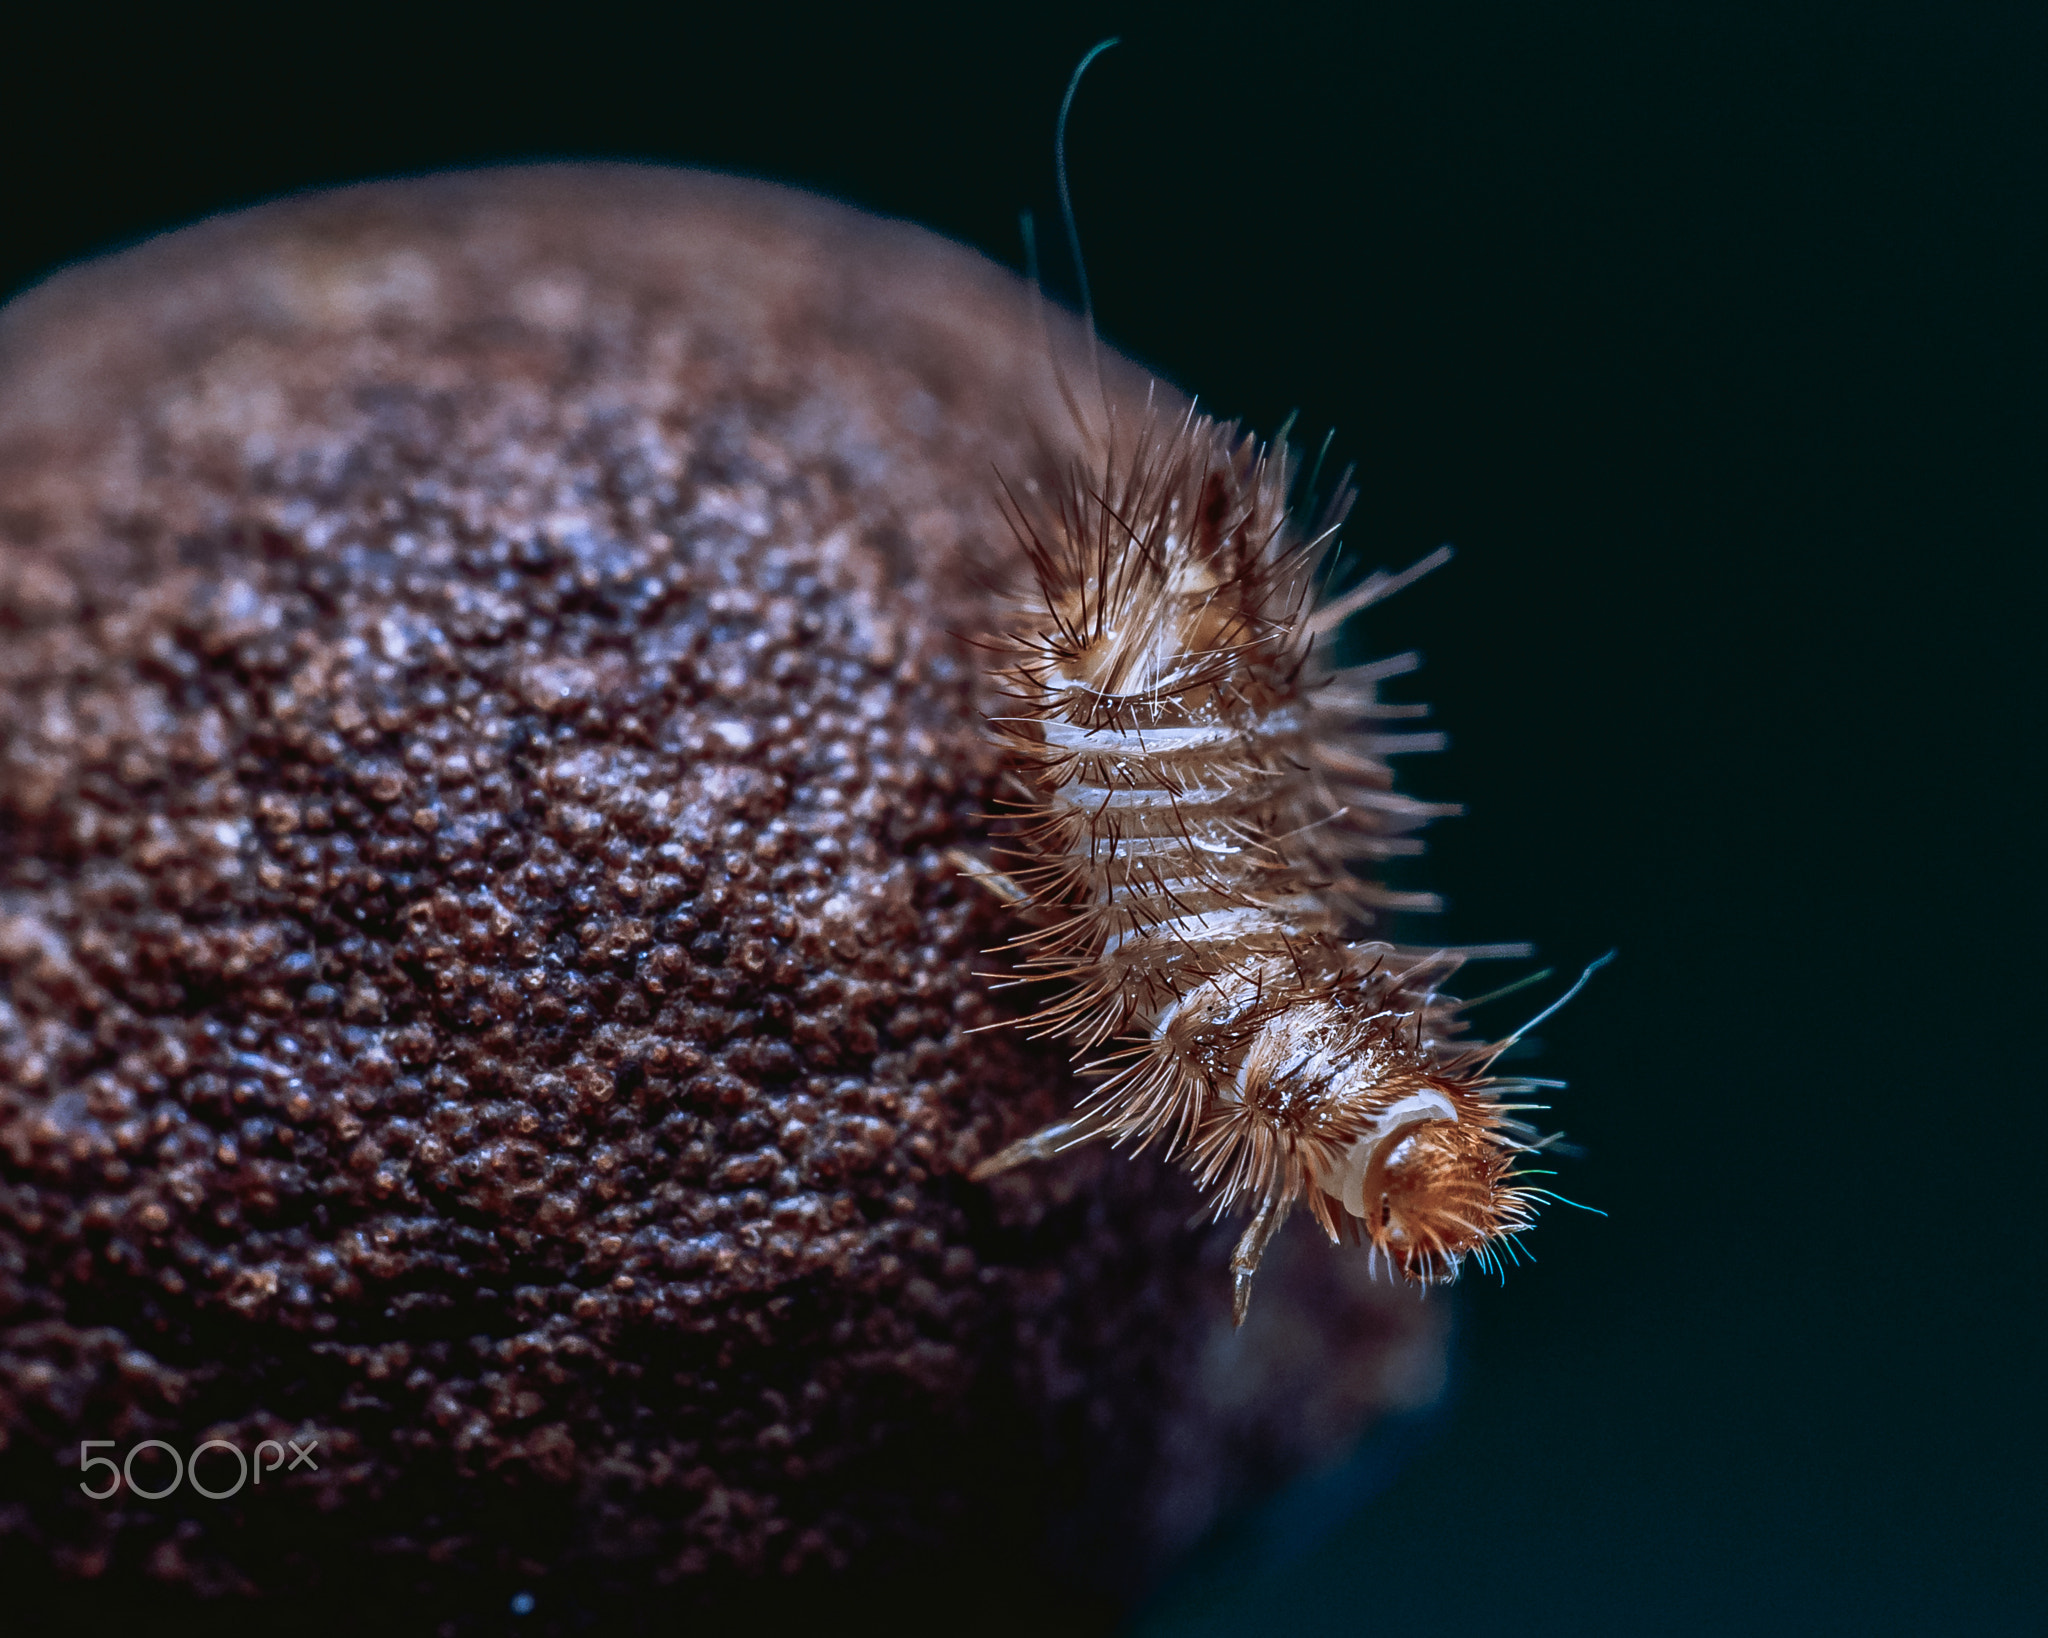 Carpet Beetle on grain of black pepper